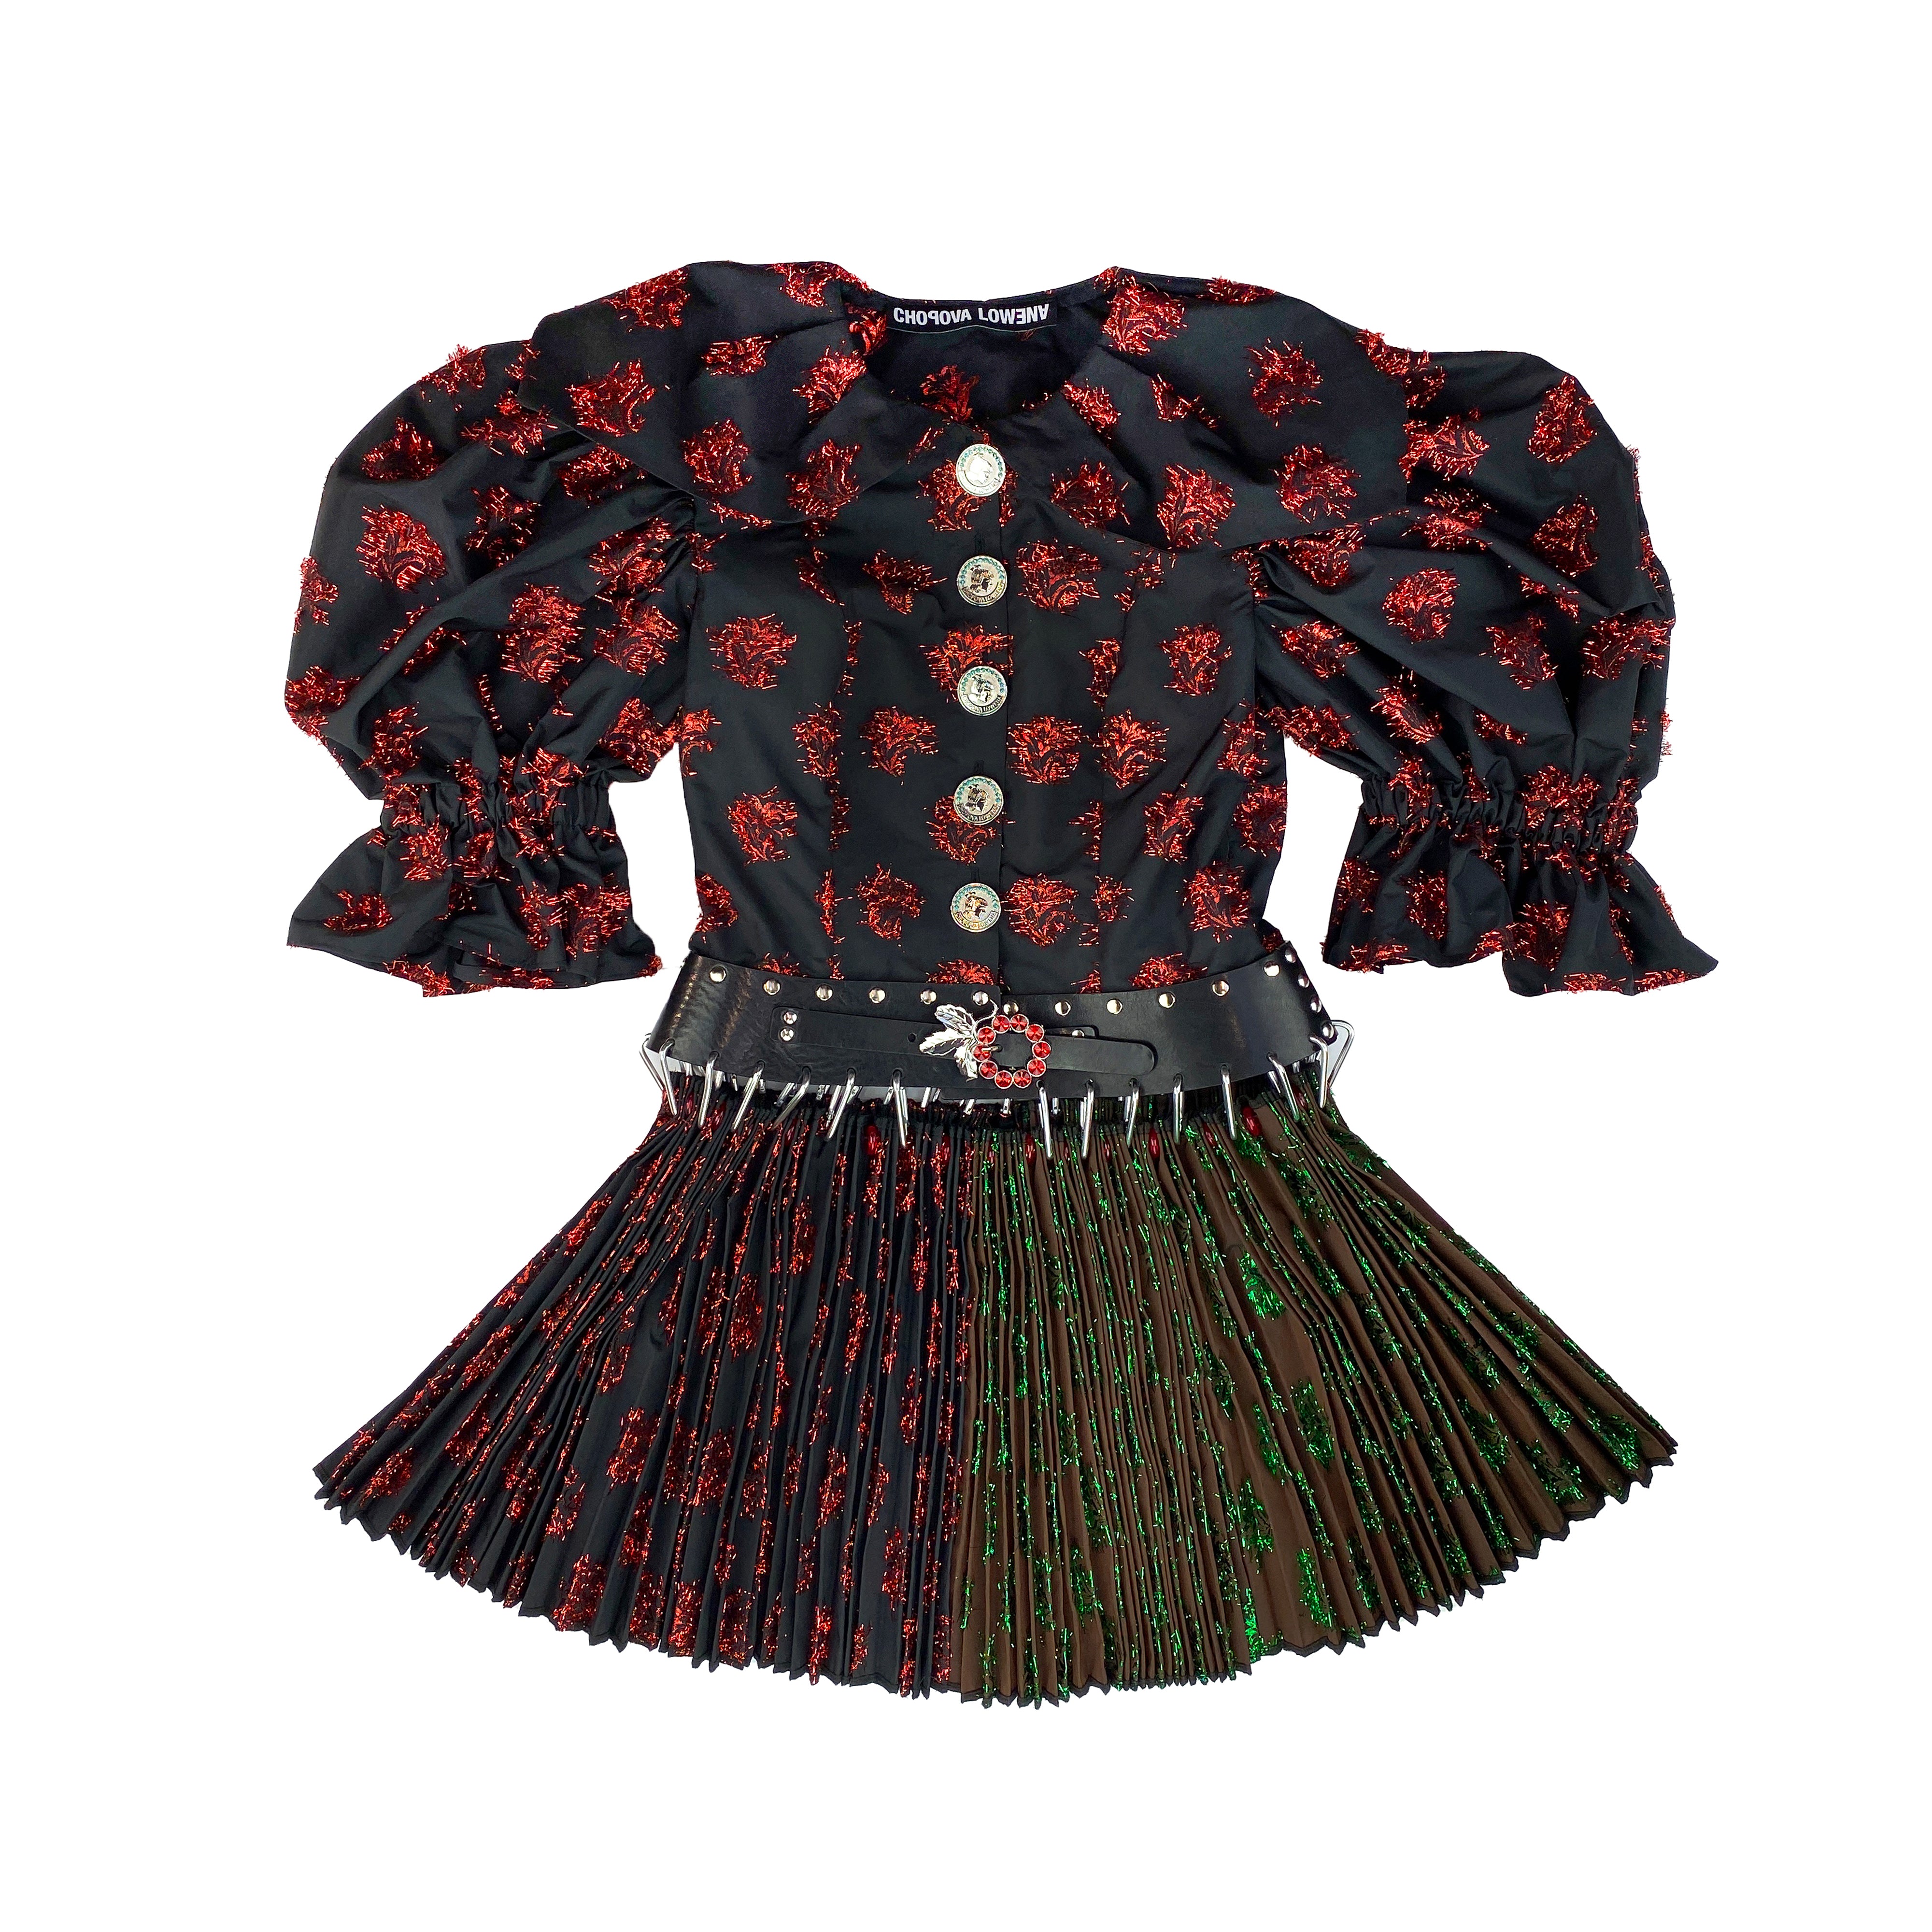 Chopova Lowena - Women's Harpsichord Dress - (Black/Red) – DSMNY E